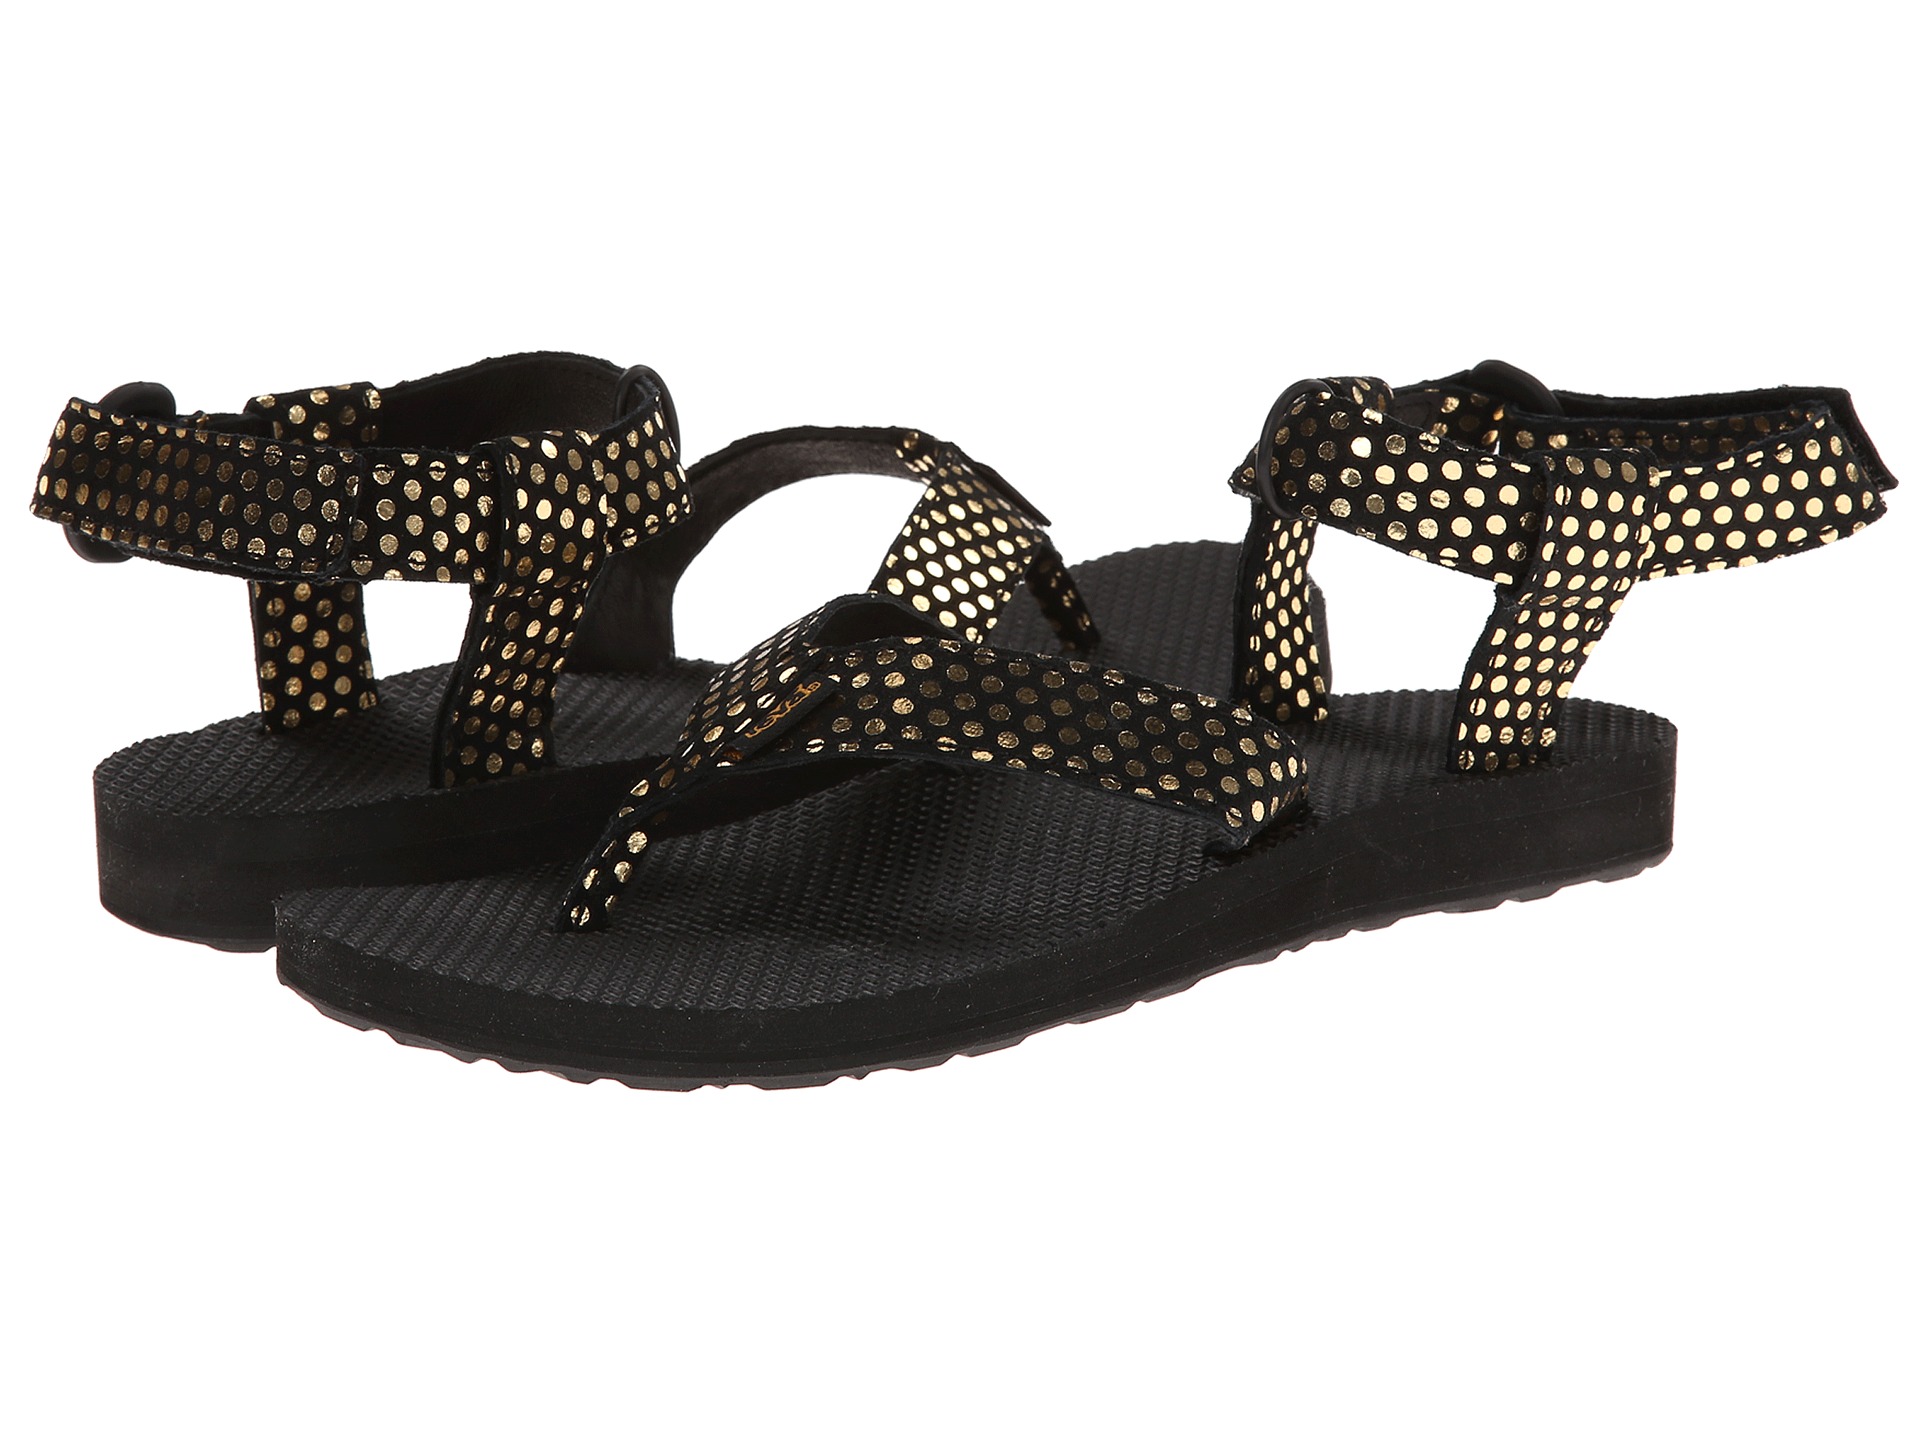 Teva Original Sandal Lea Dots Black Gold | Shipped Free at Zappos